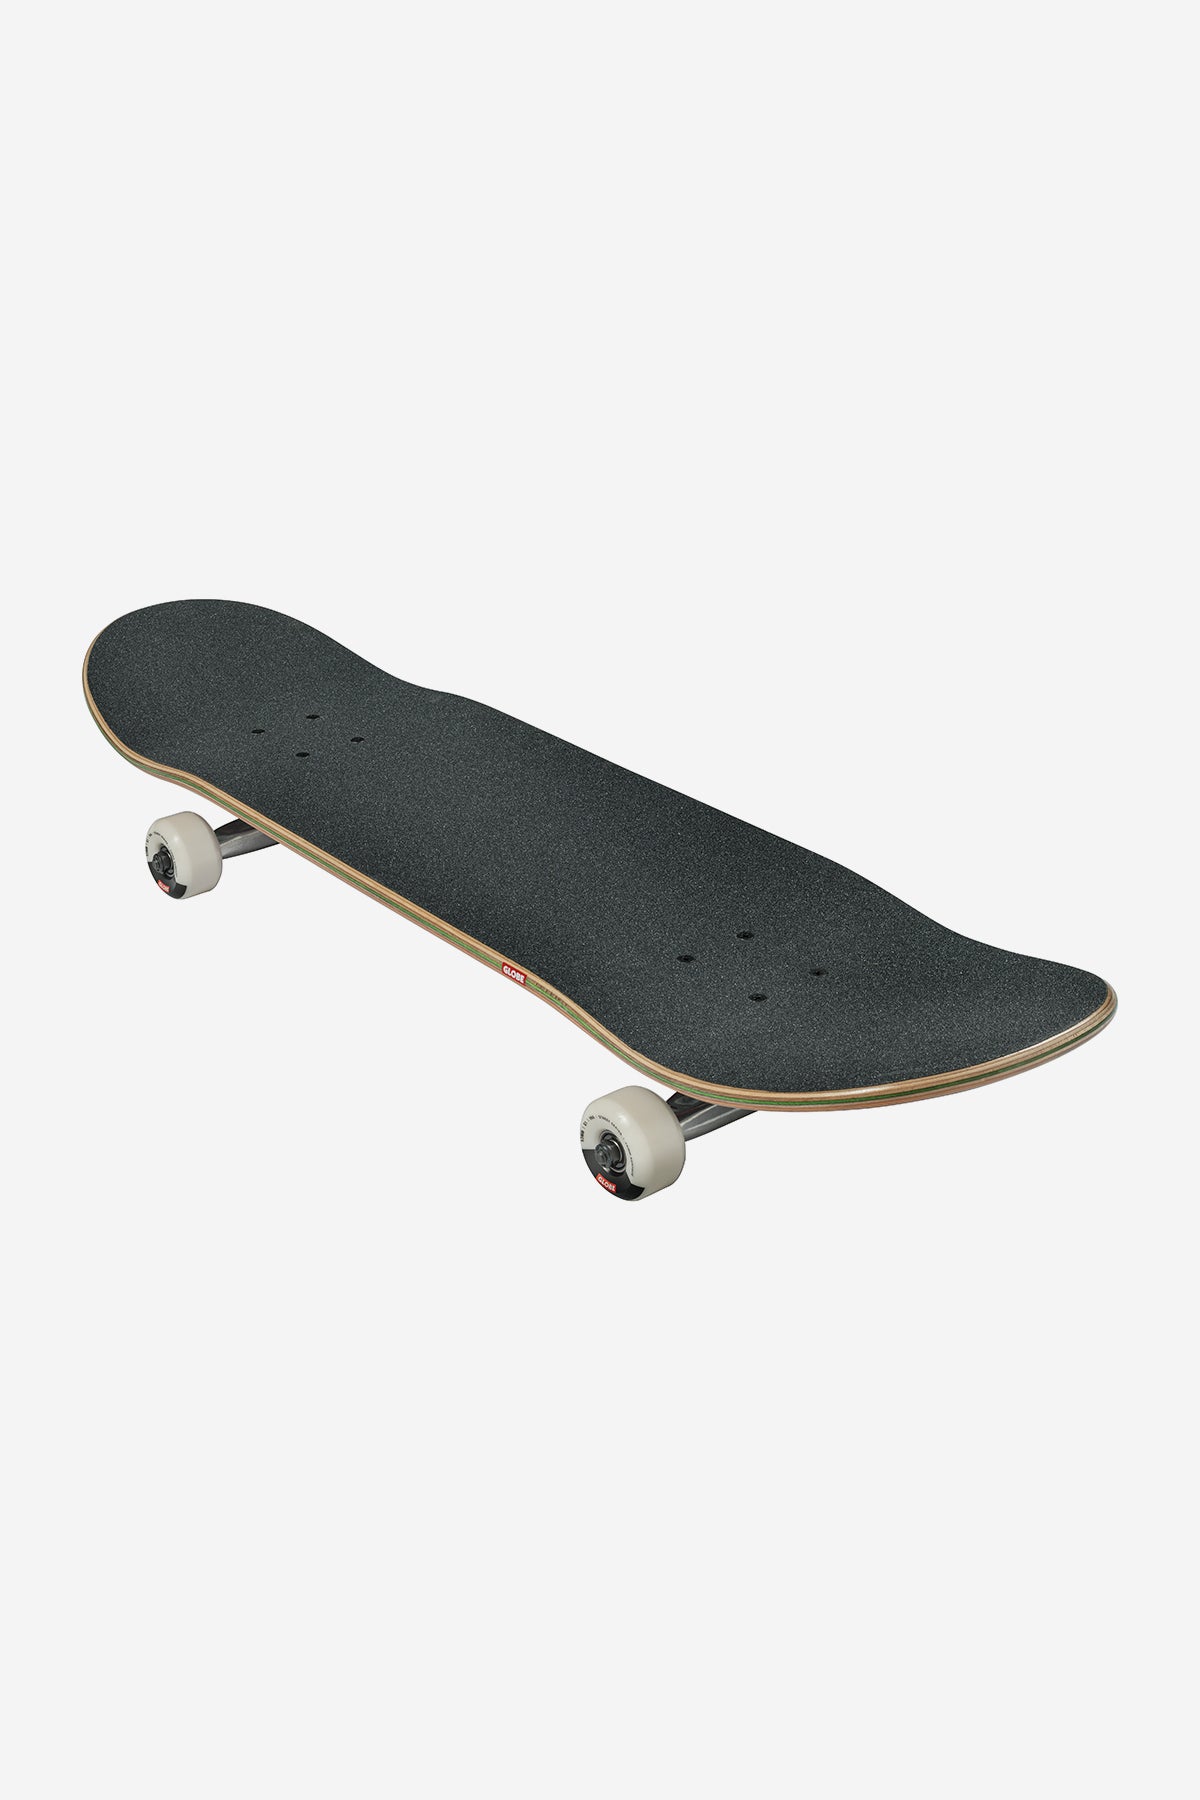 Globe - G1 Stack - Daydream - 8.25" Compleet Skateboard